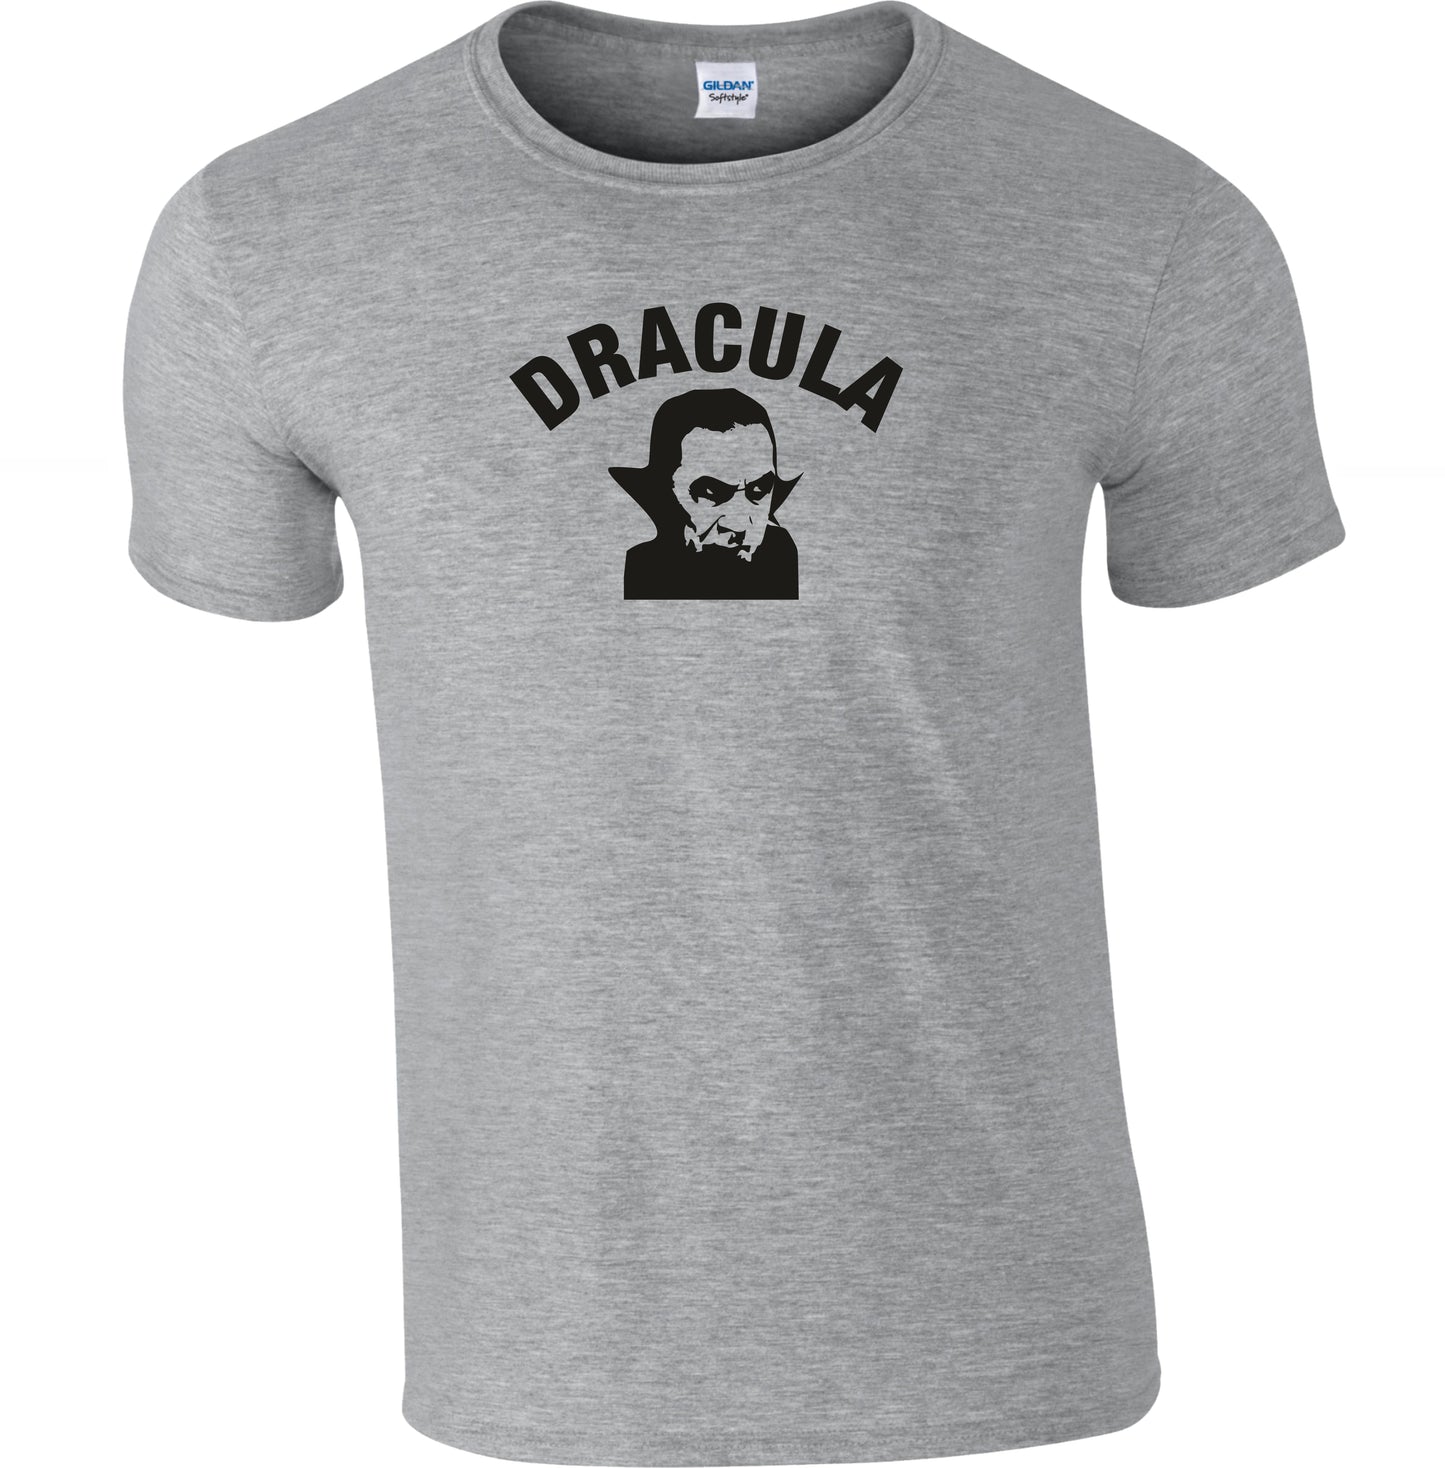 Dracula T-Shirt - Retro Vampire Horror, Various Colours